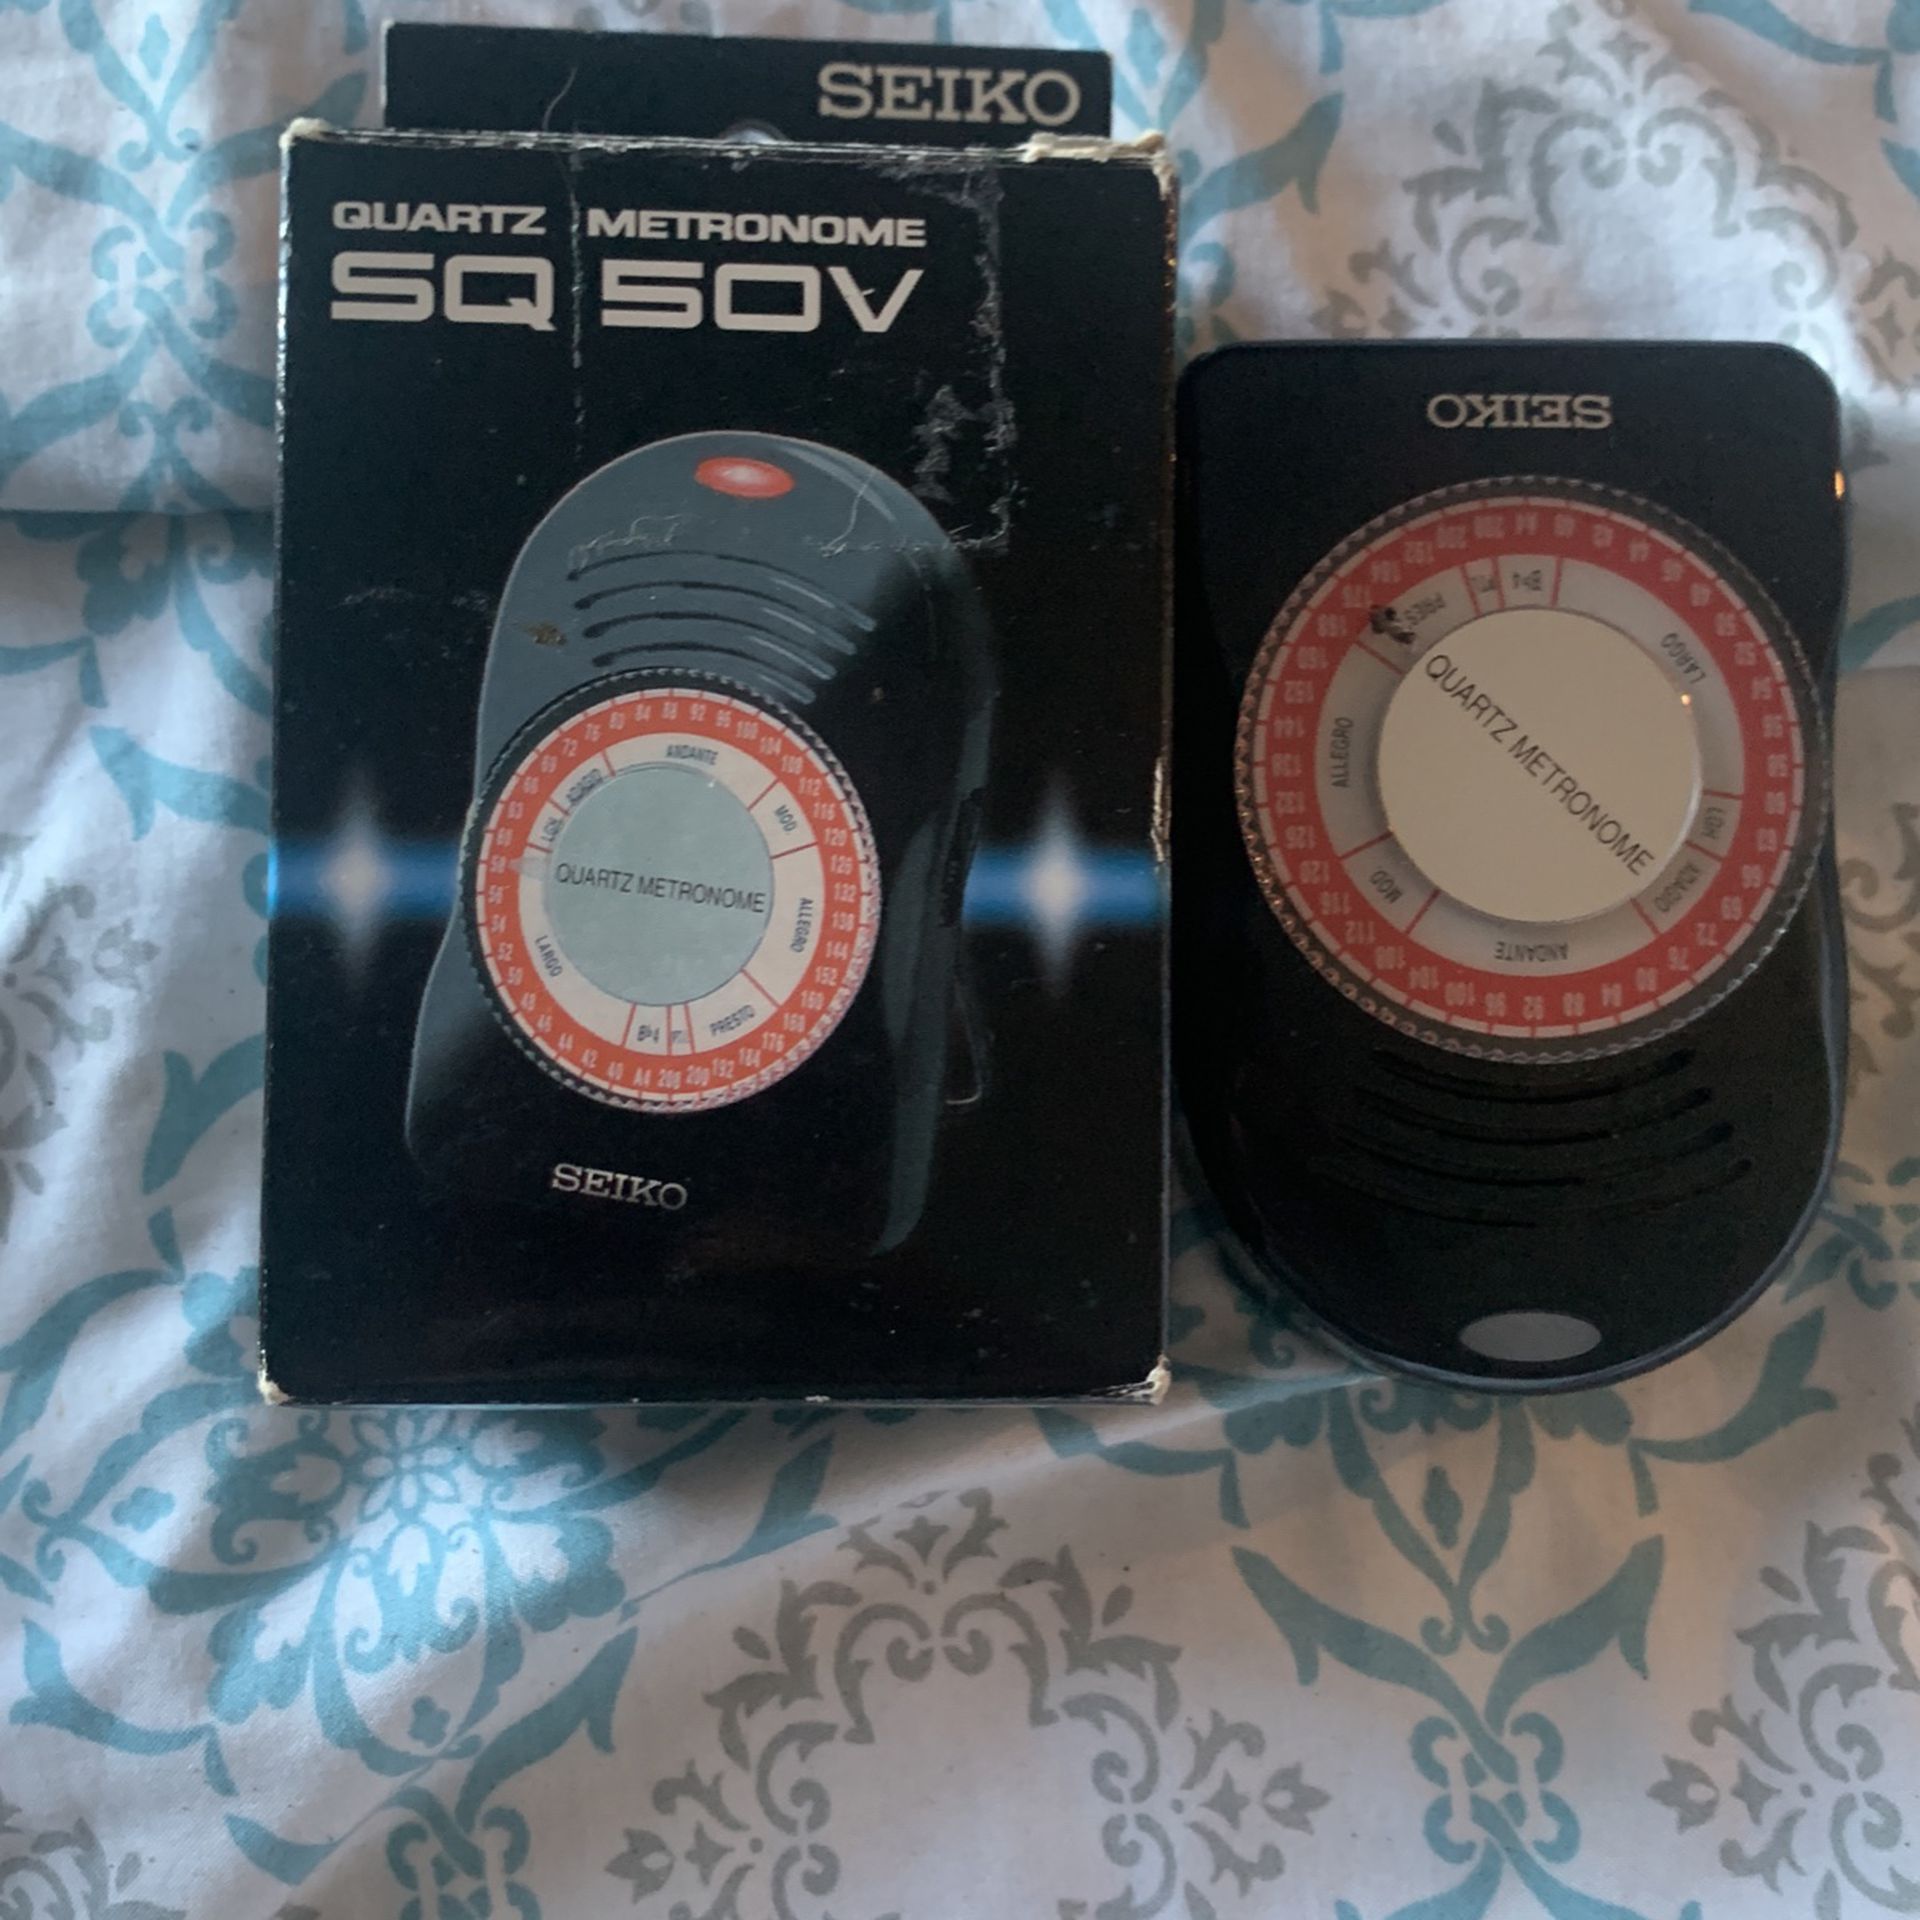 Seiko SQ 50V Metronome In Box Music Instrument for Sale in San Antonio, TX  - OfferUp